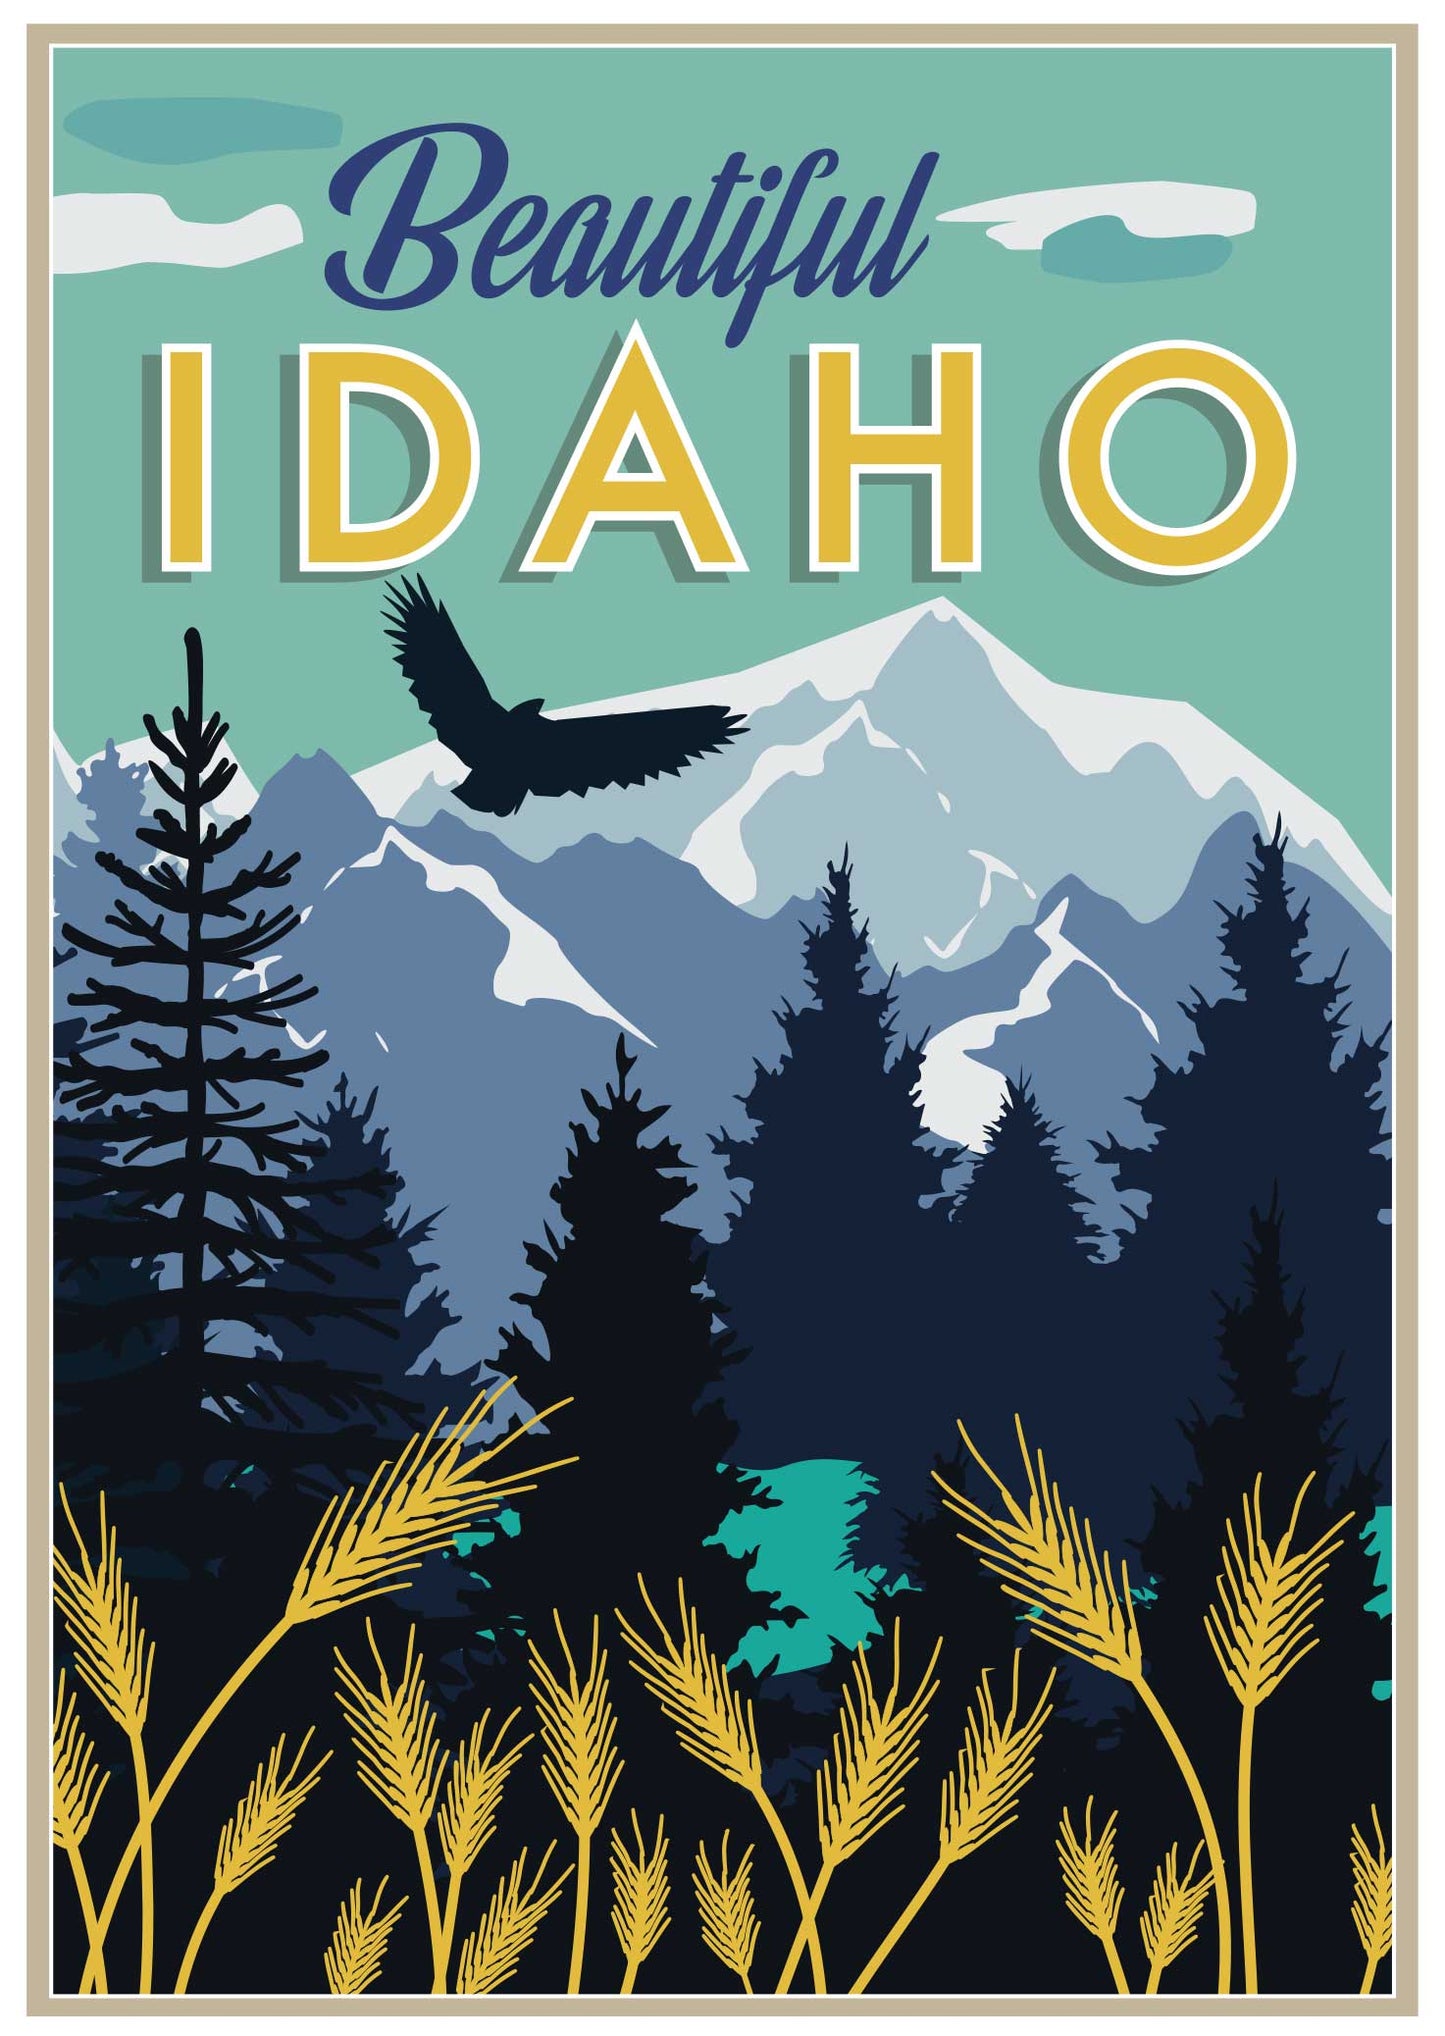 Beautiful Idaho greeting card